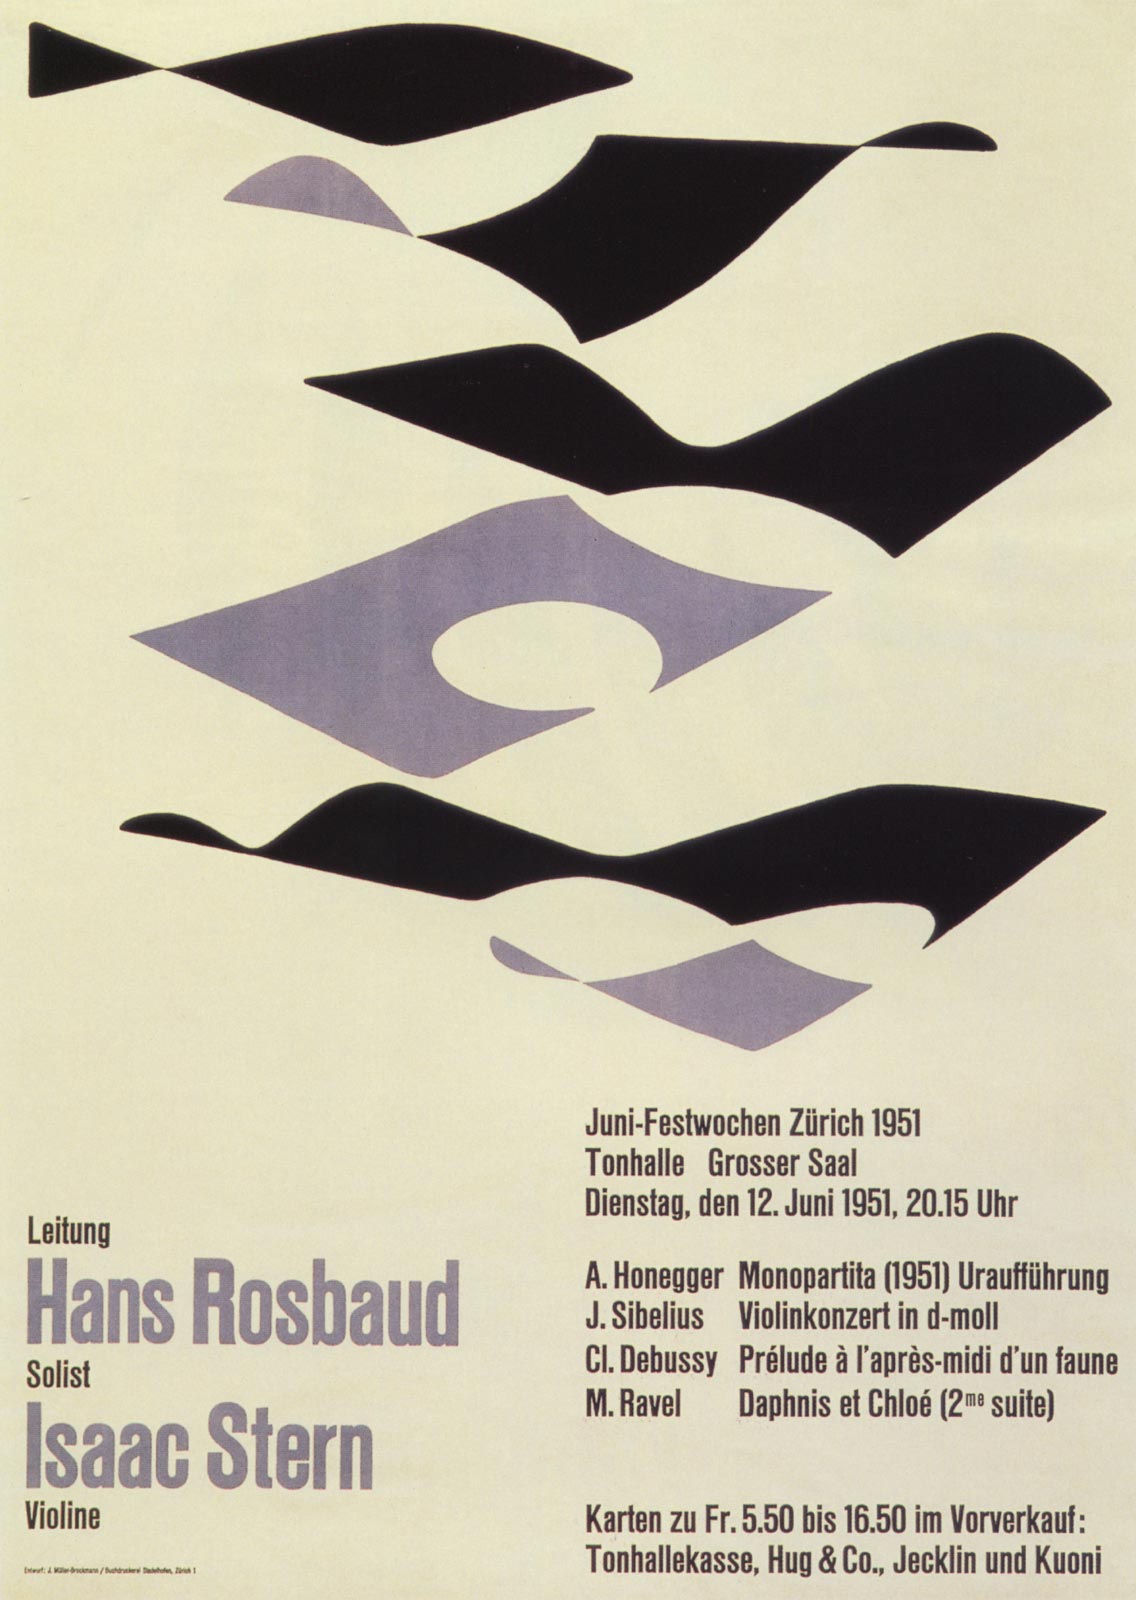 12. Zurich Tonhalle. June Festival. Concert poster, 1951